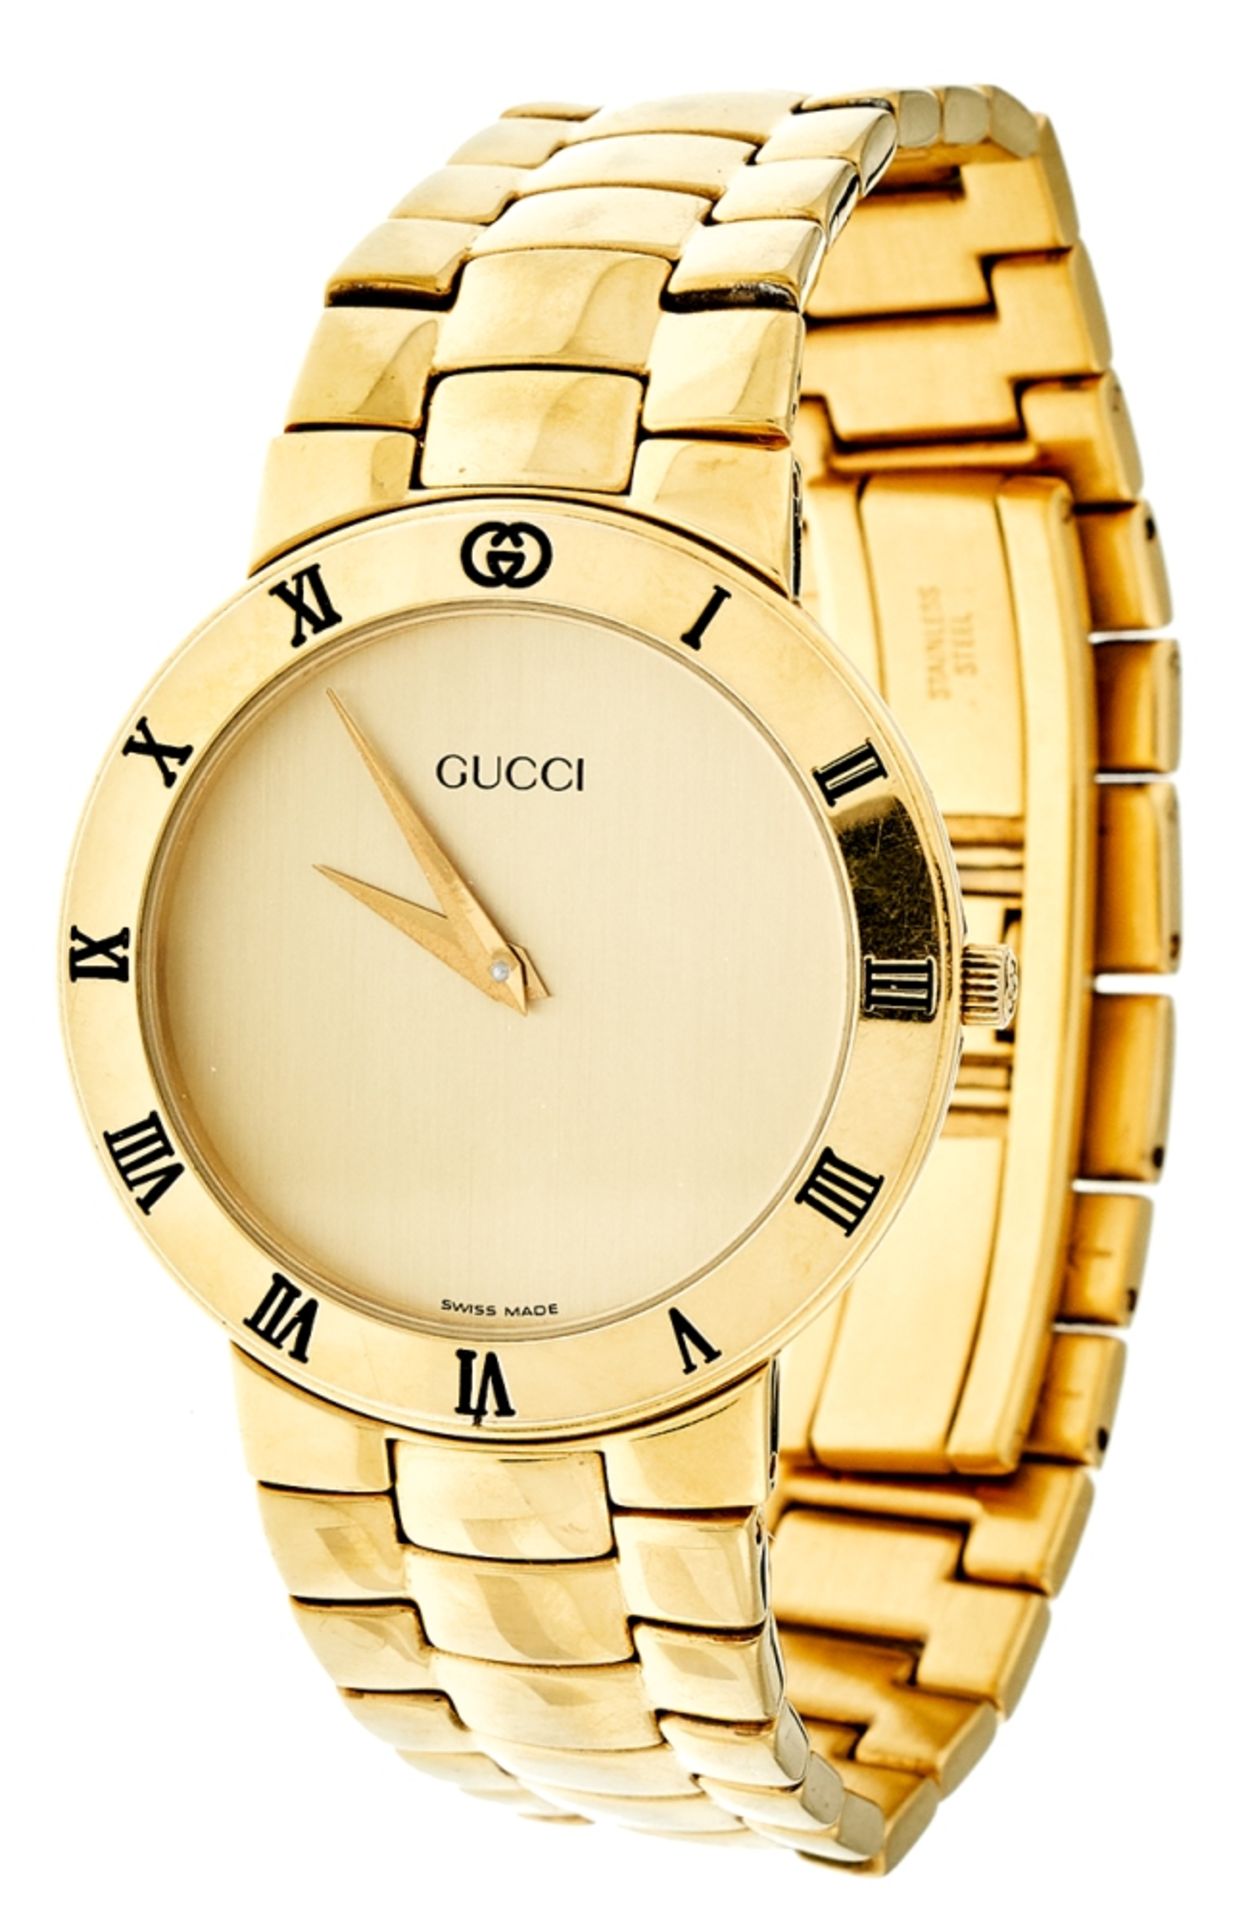 Gucci 3300.2 M wrist watch. Ca. 33 mm, gold-painted case, sapphire glass, quartz. Golden dial,